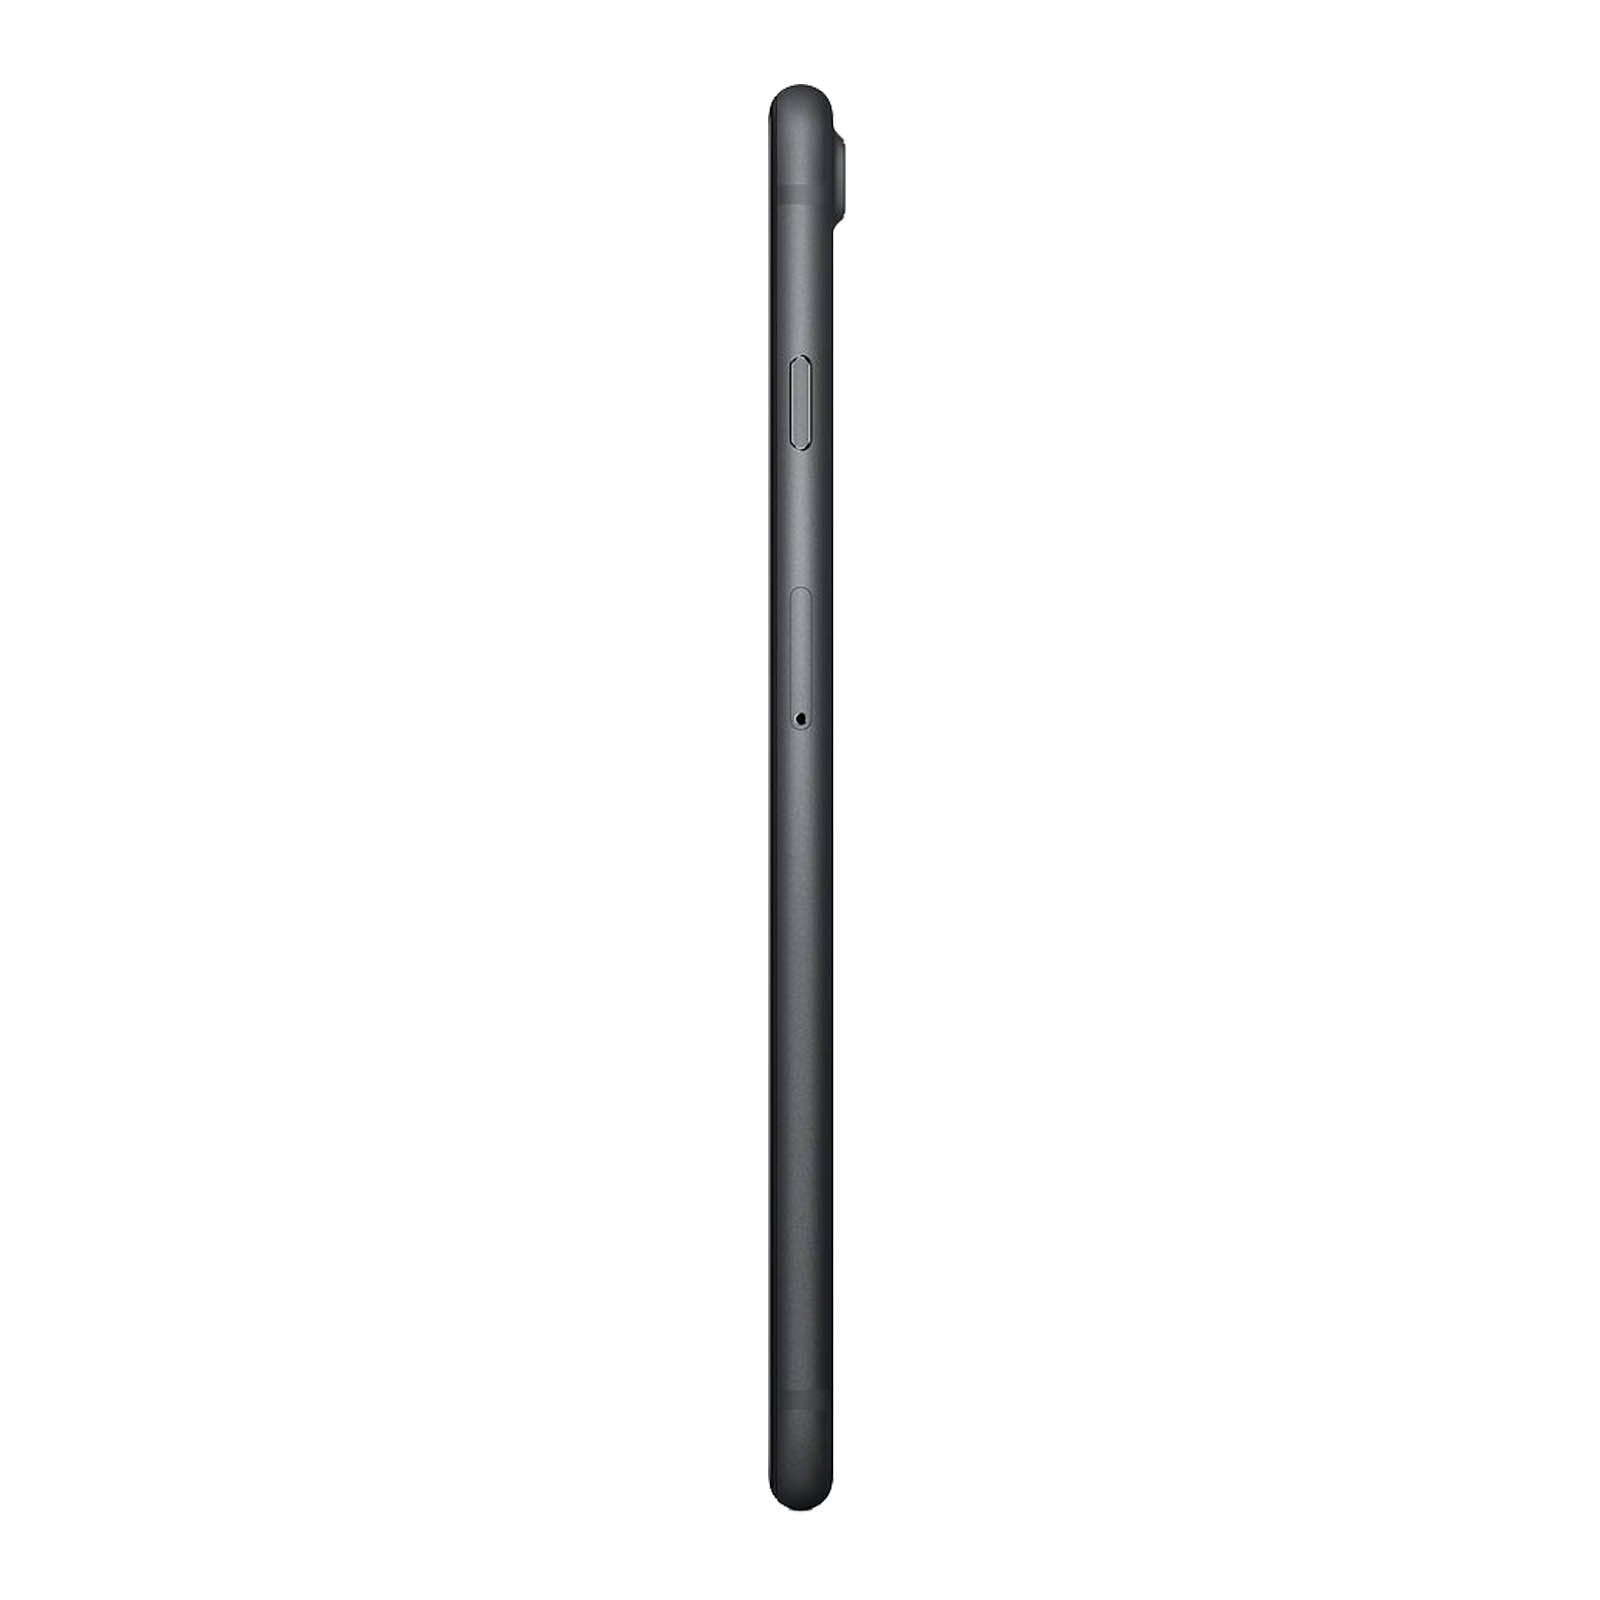 Apple iPhone 7 32GB Black Pristine - Unlocked